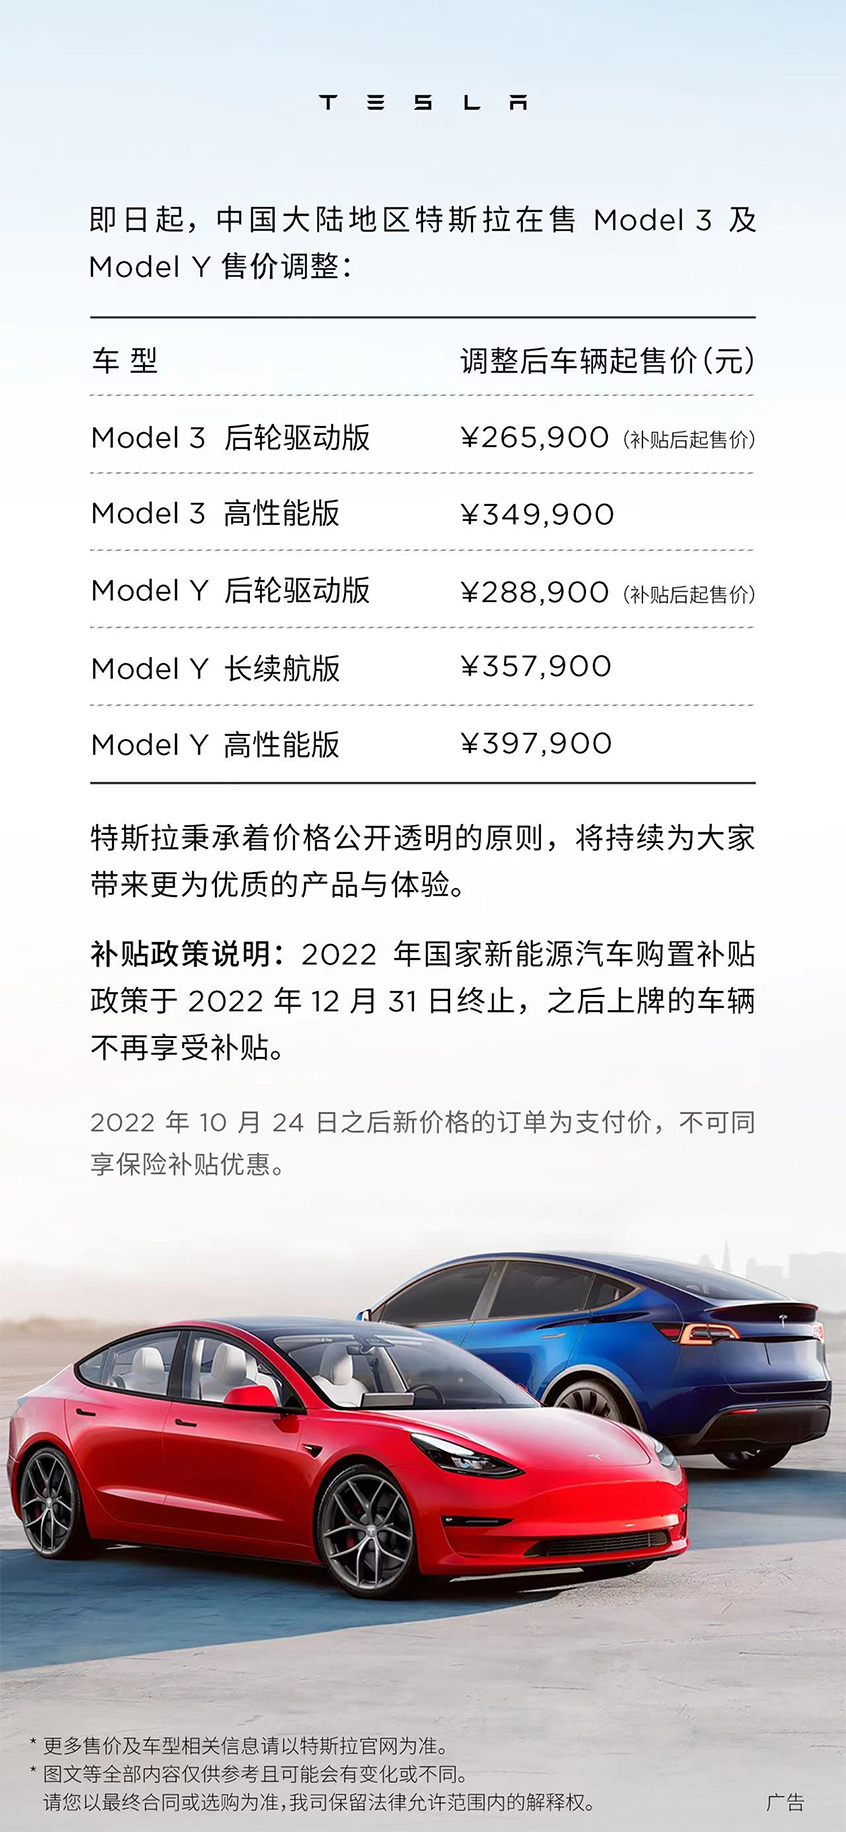 特斯拉Model 3/Model Y降价 售价26.59万元起